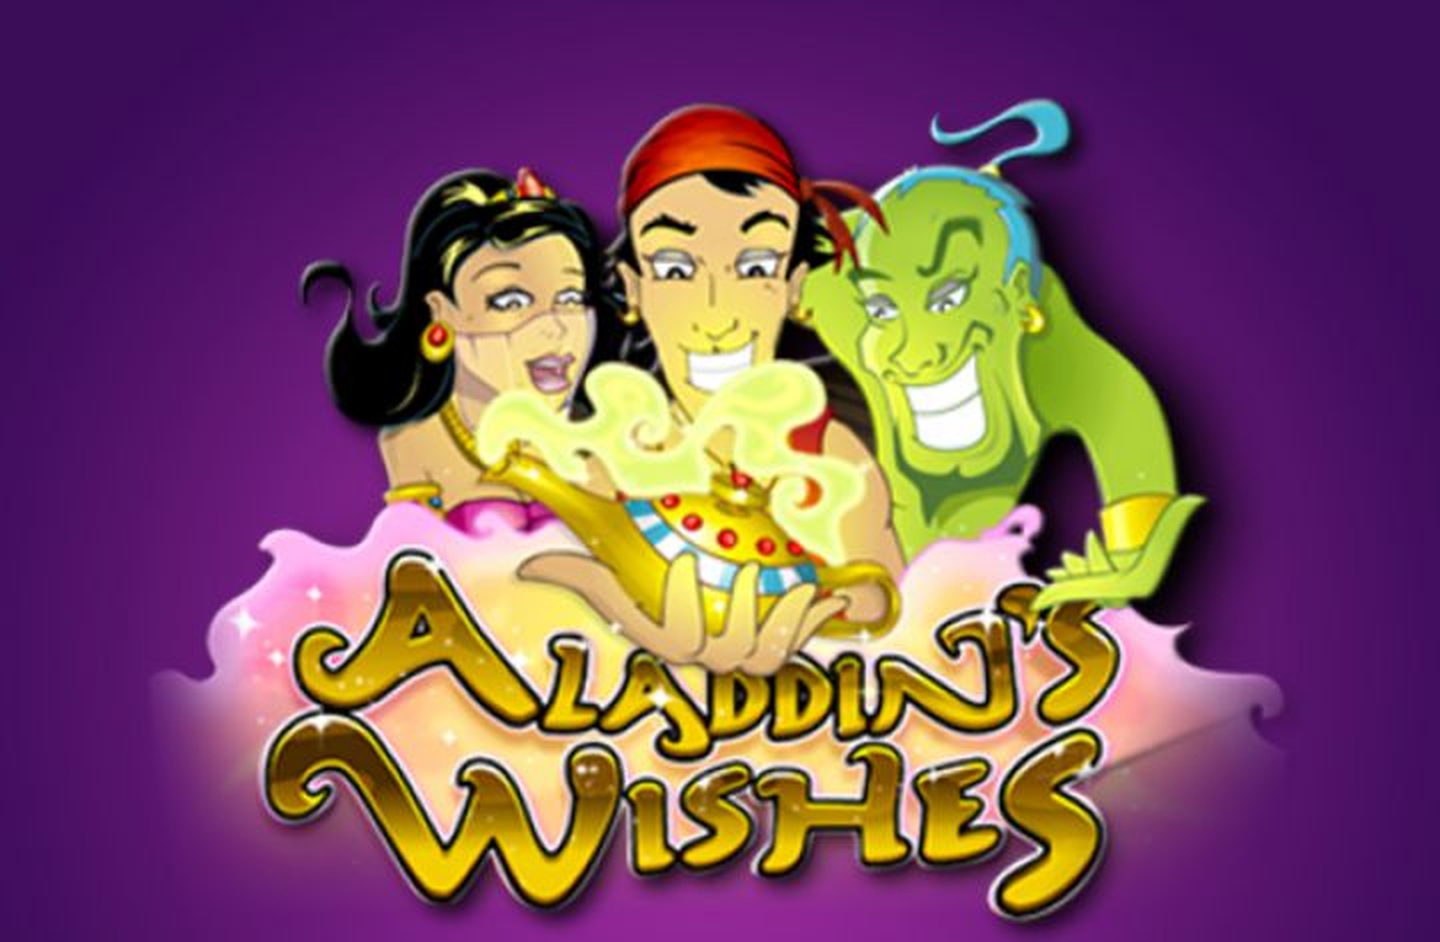 Aladdin's wishes